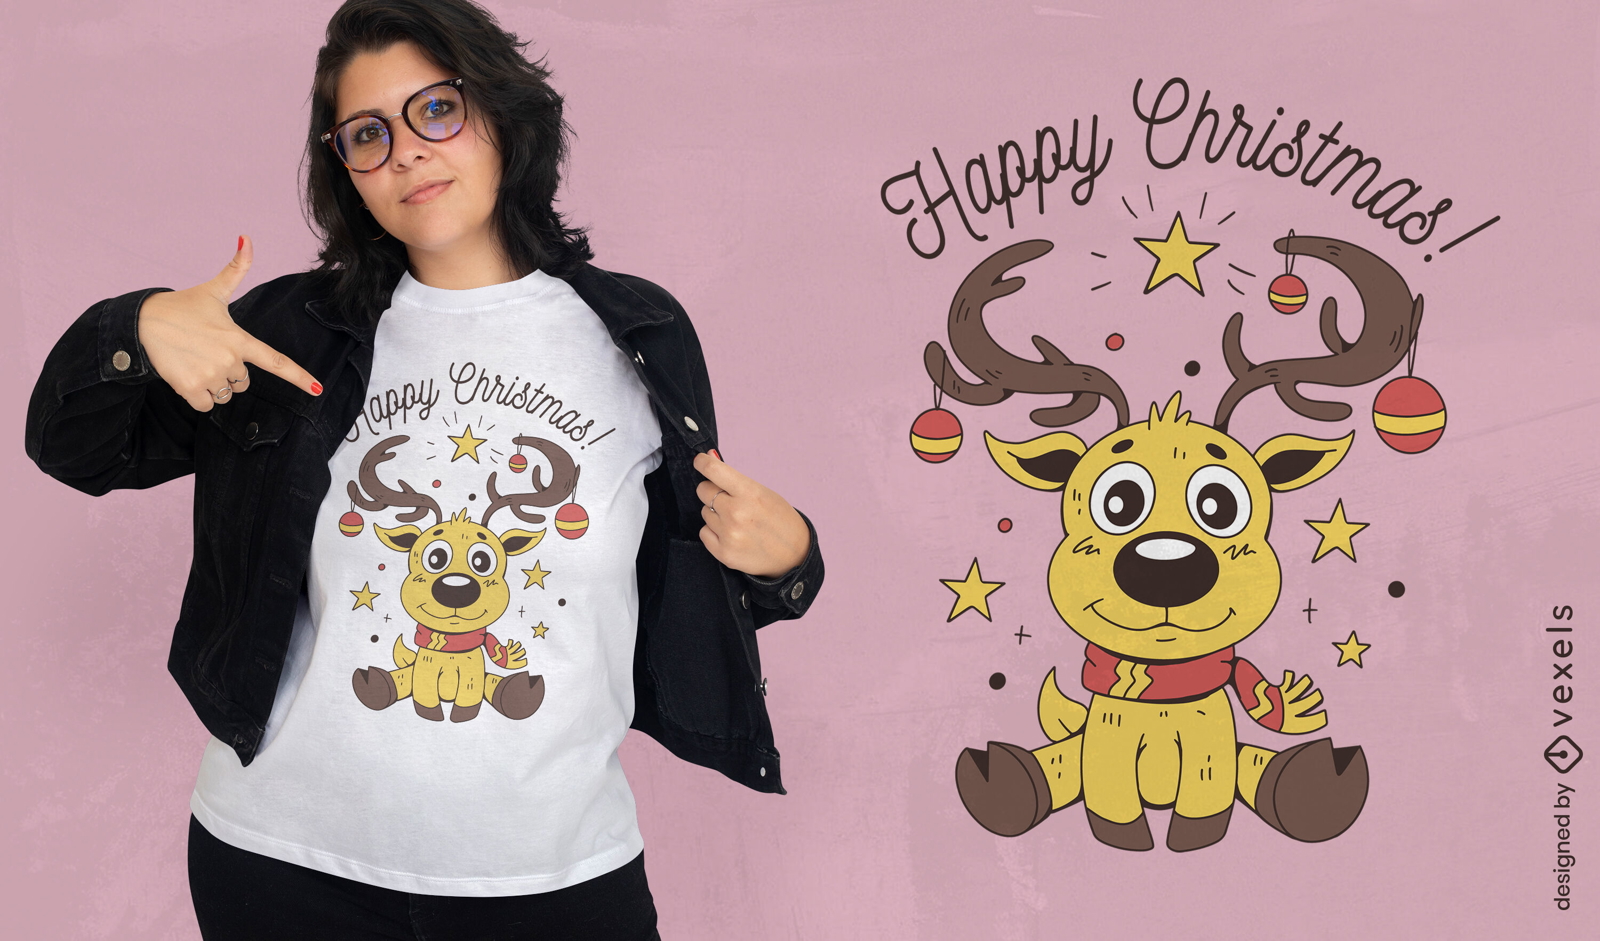 Christmas reindeer cartoon t-shirt design